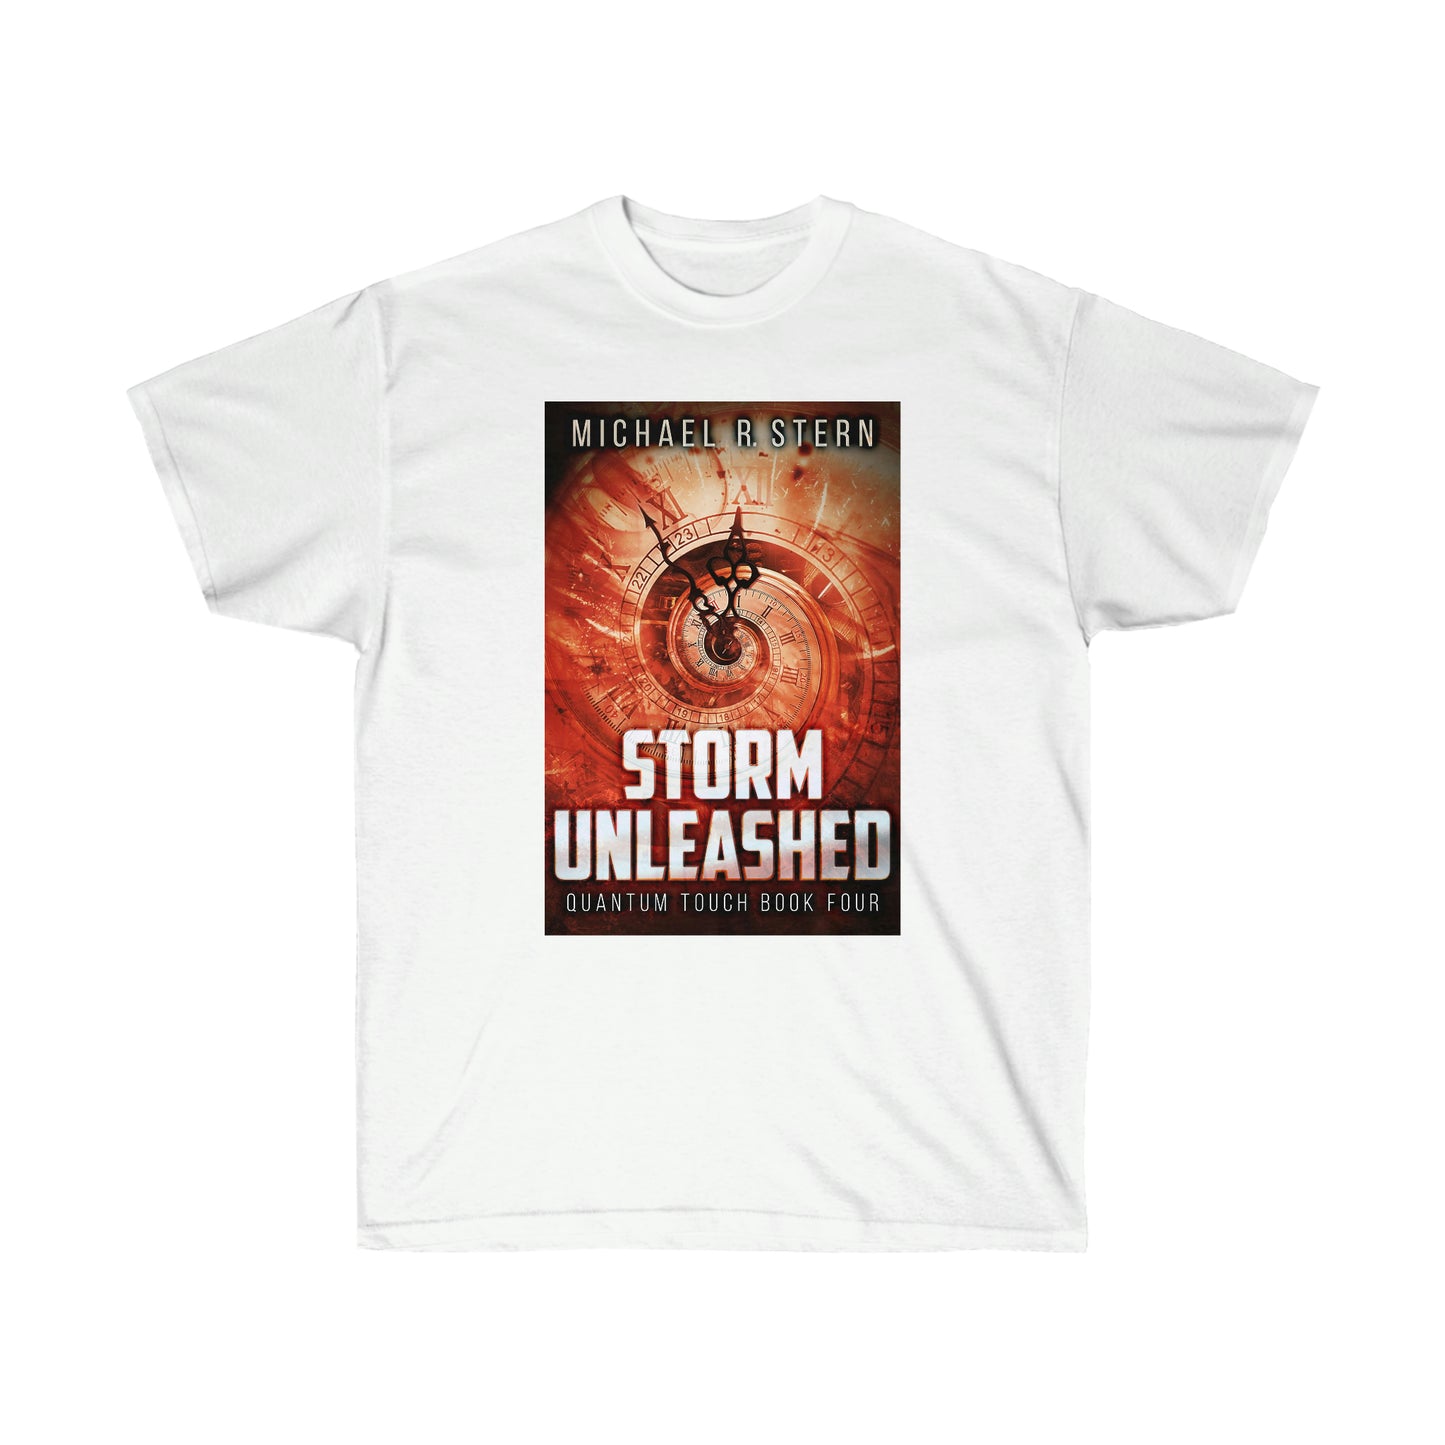 Storm Unleashed - Unisex T-Shirt